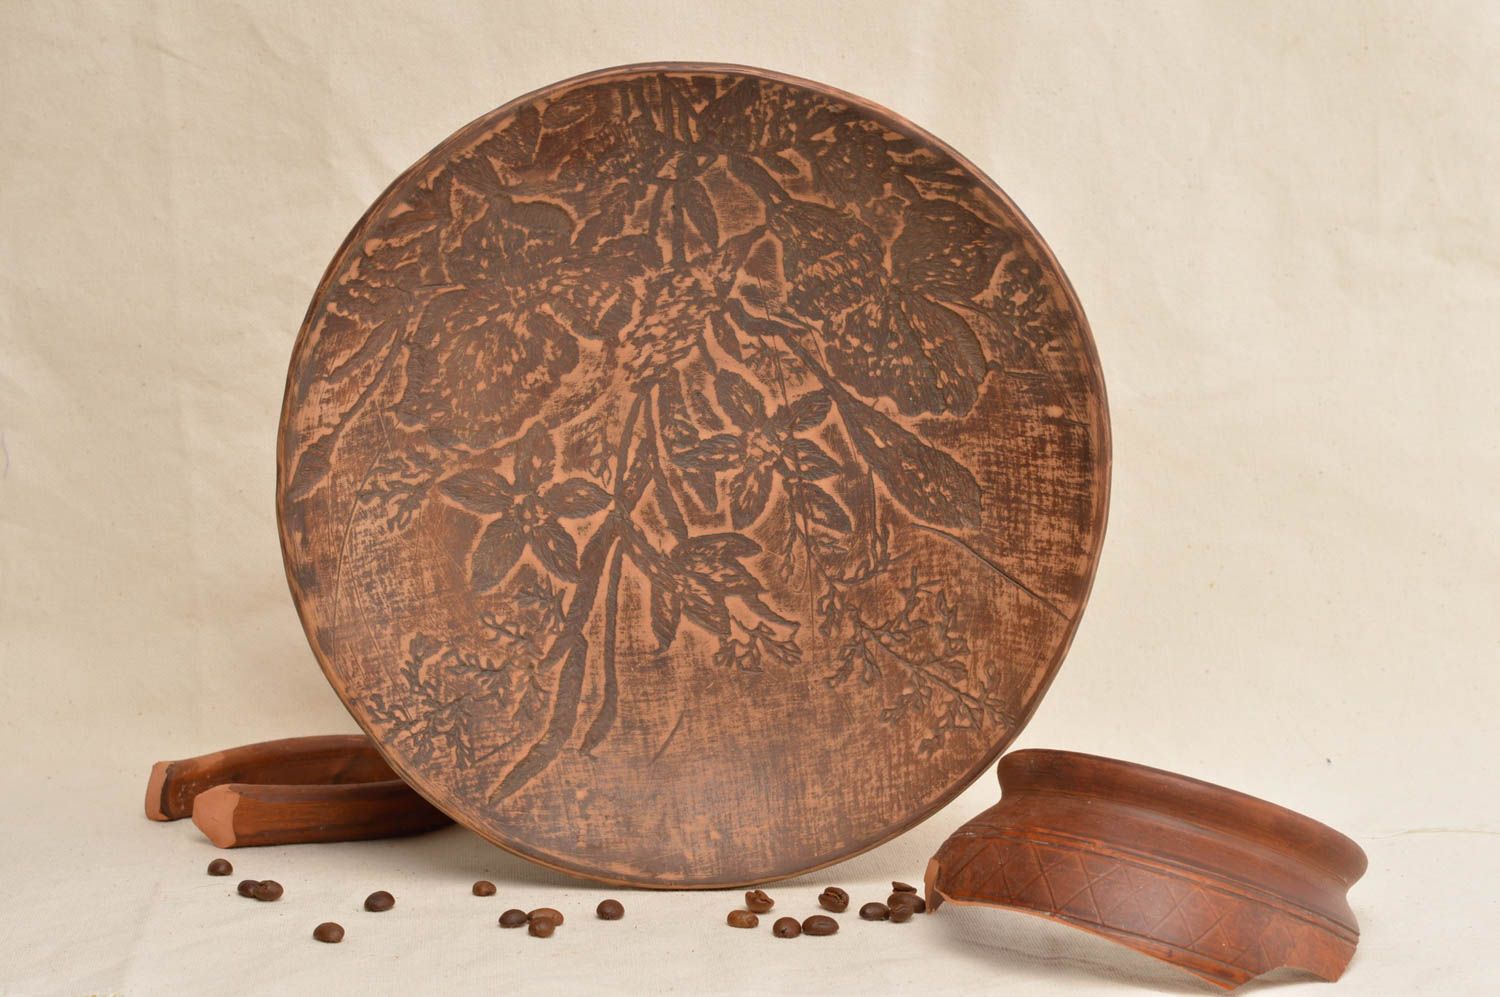 Beautiful handmade ceramic plate unusual clay plate table setting ideas photo 1